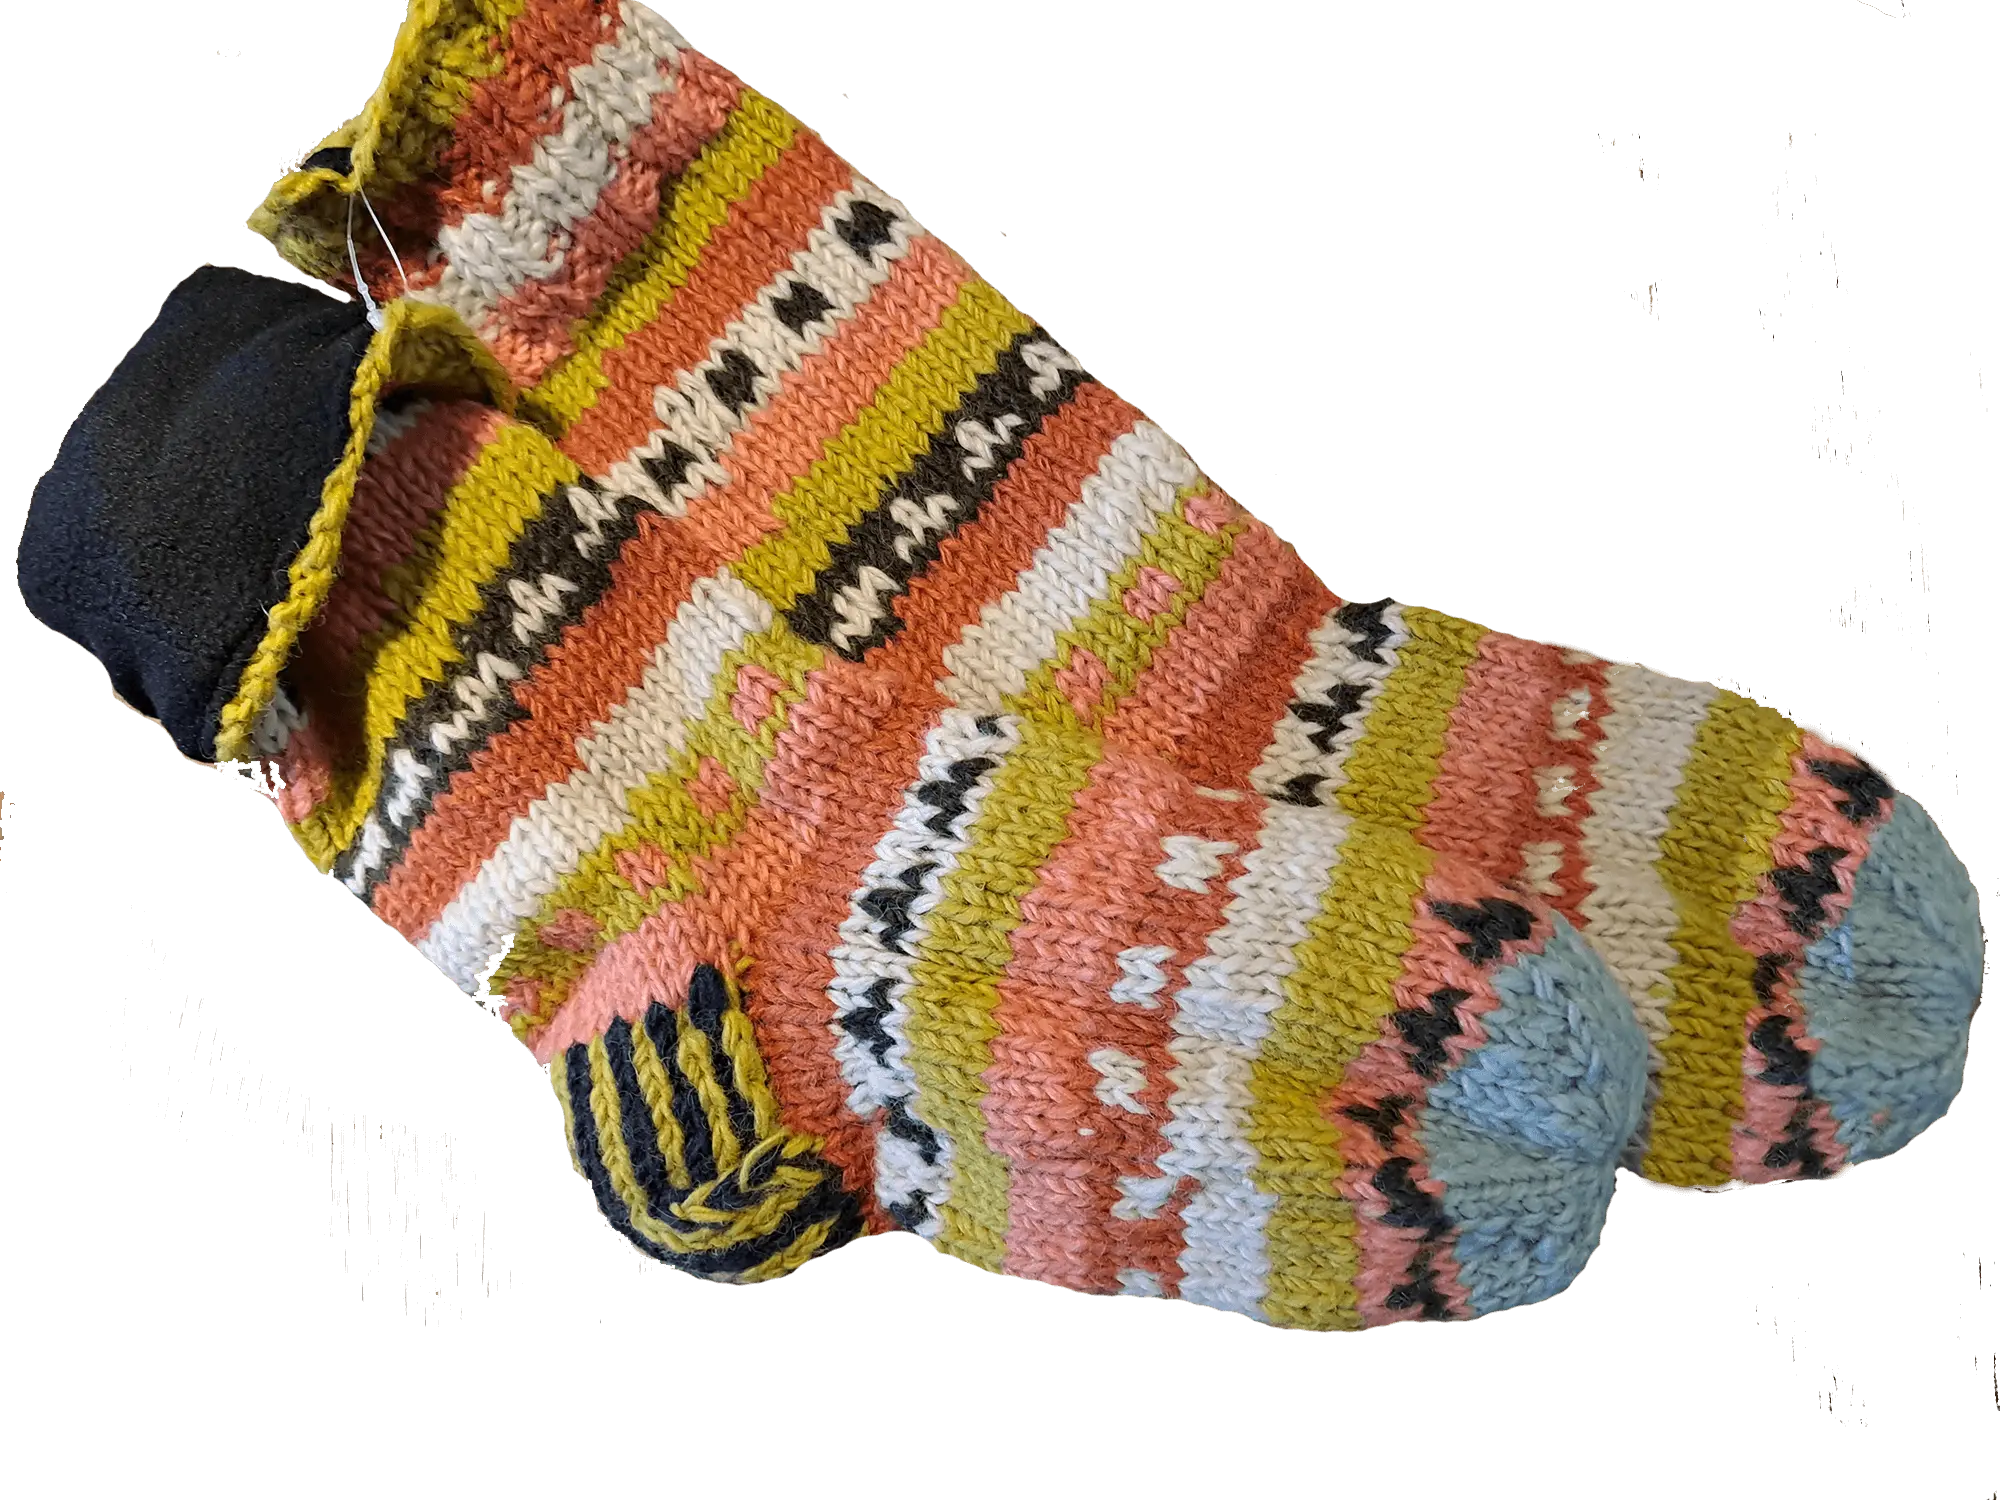 Hand knit wool socks, Nepal - Village Goods